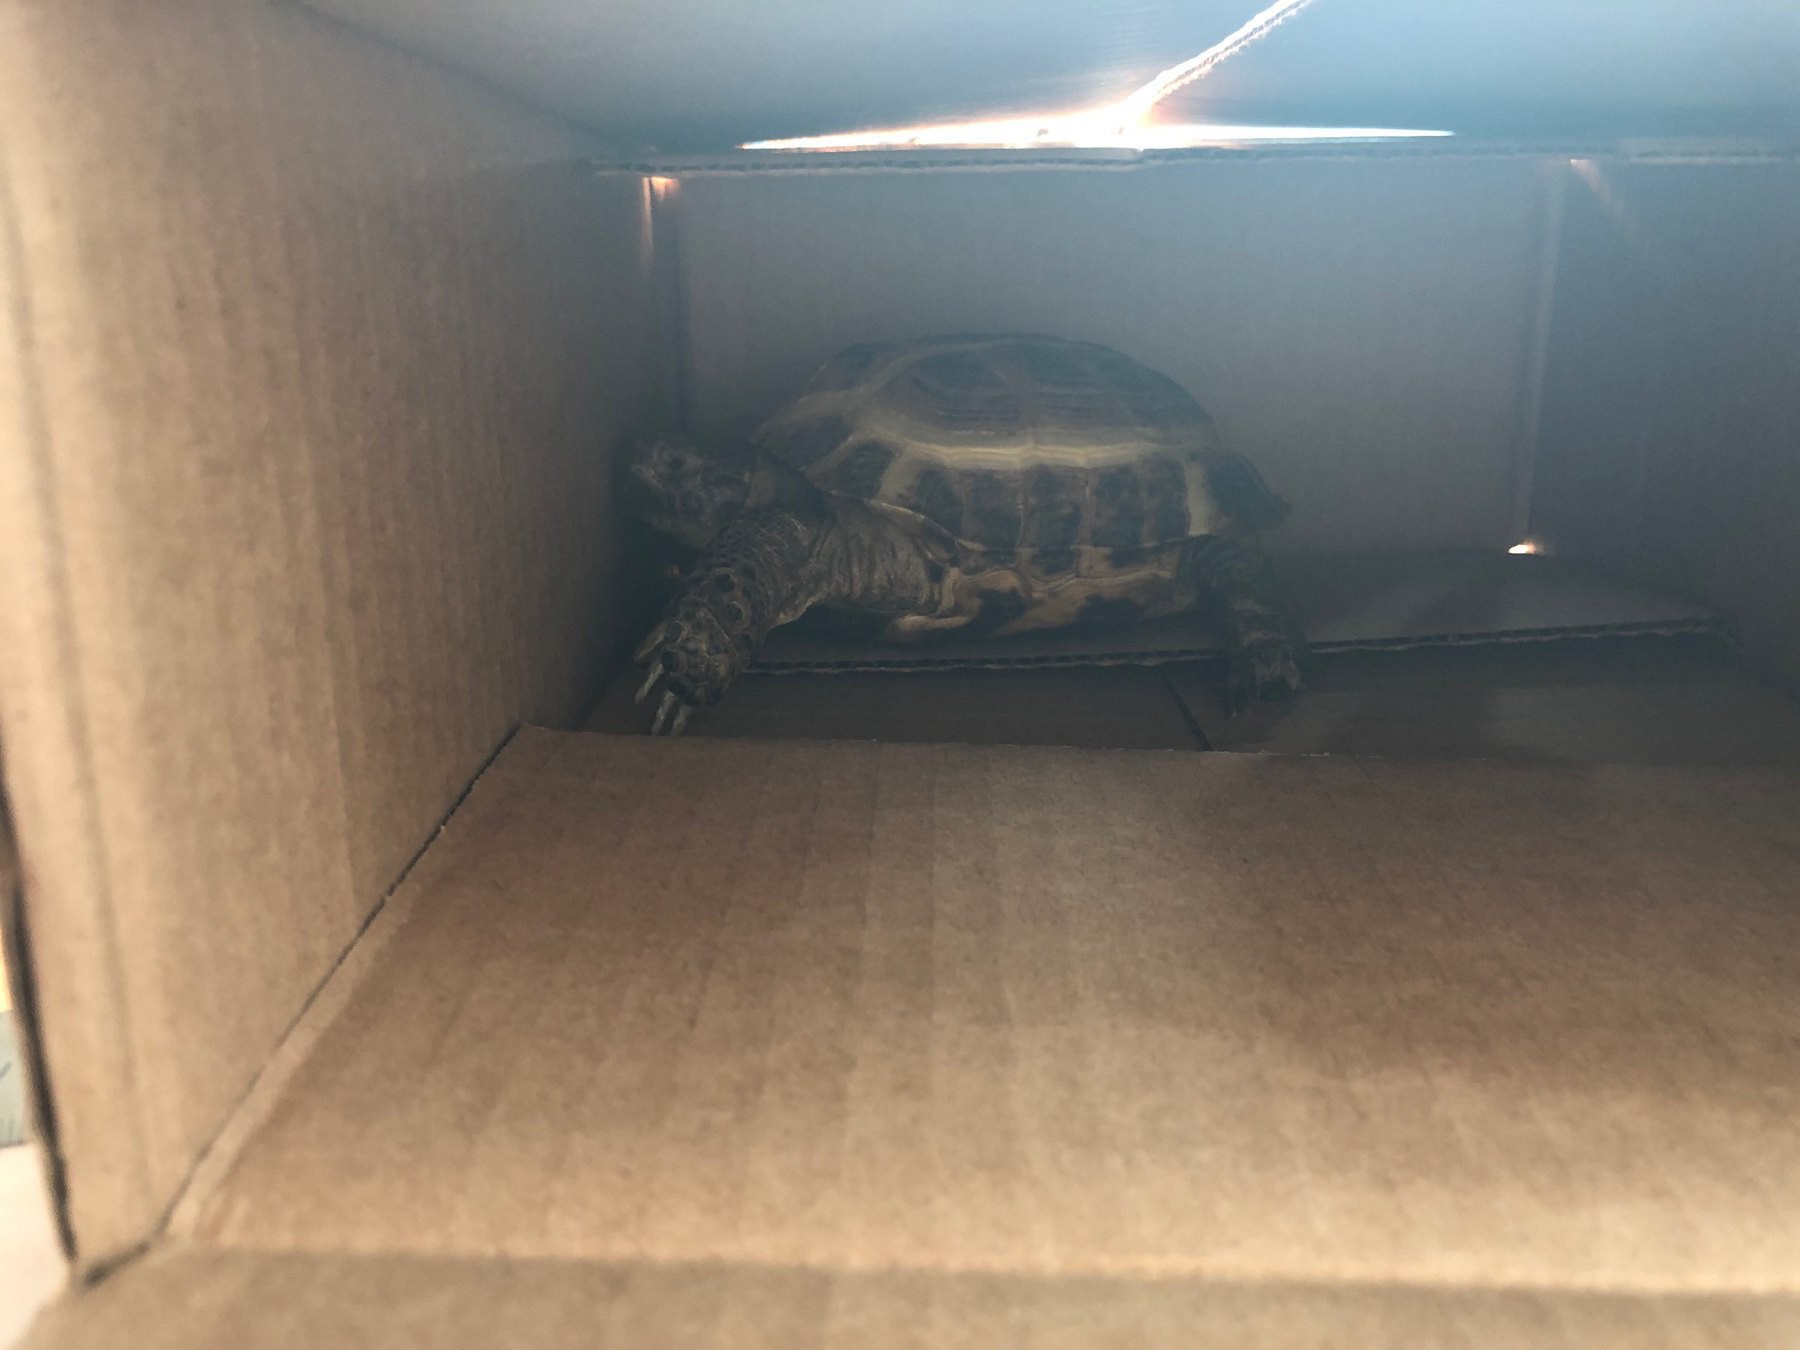 Roomba the tortoise in a cardboard box. 